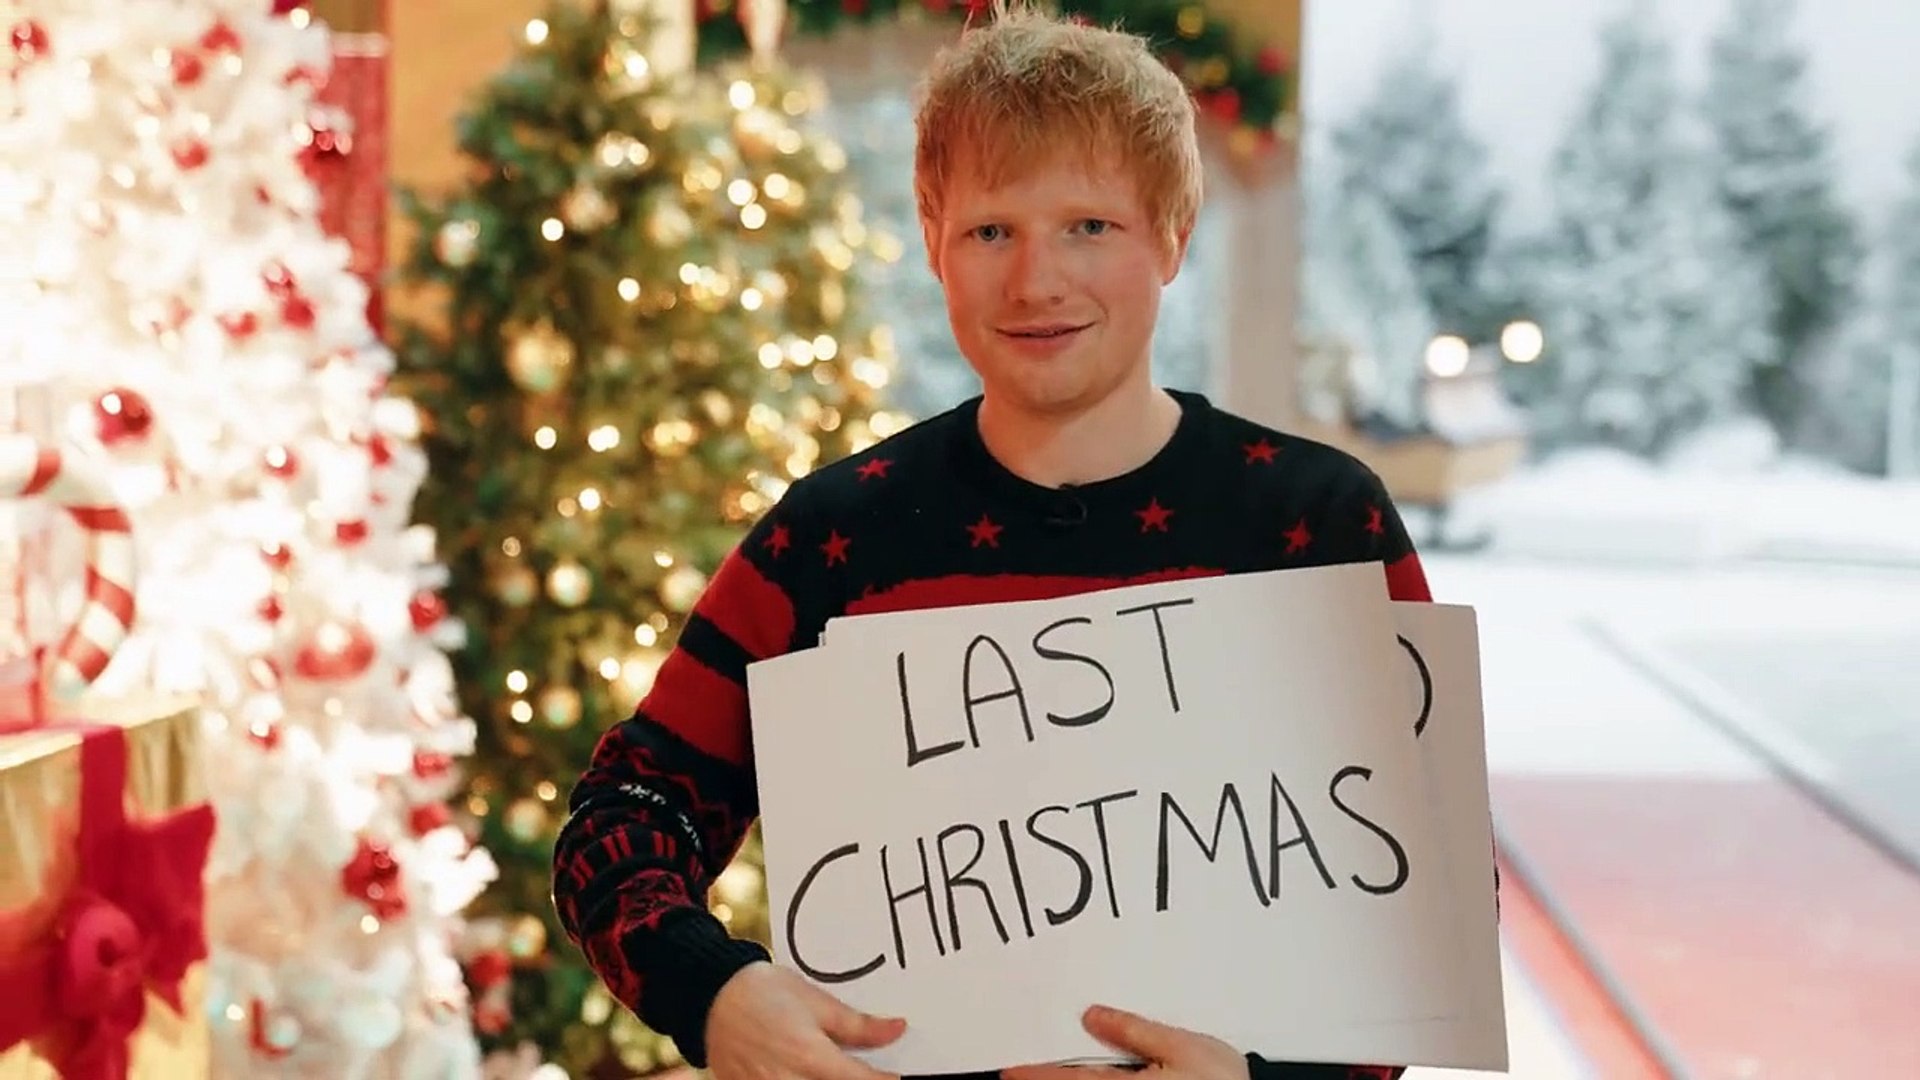 Ed Sheeran et Elton John : teaser de leur chanson de Noël "Merry Christmas"  - Vidéo Dailymotion